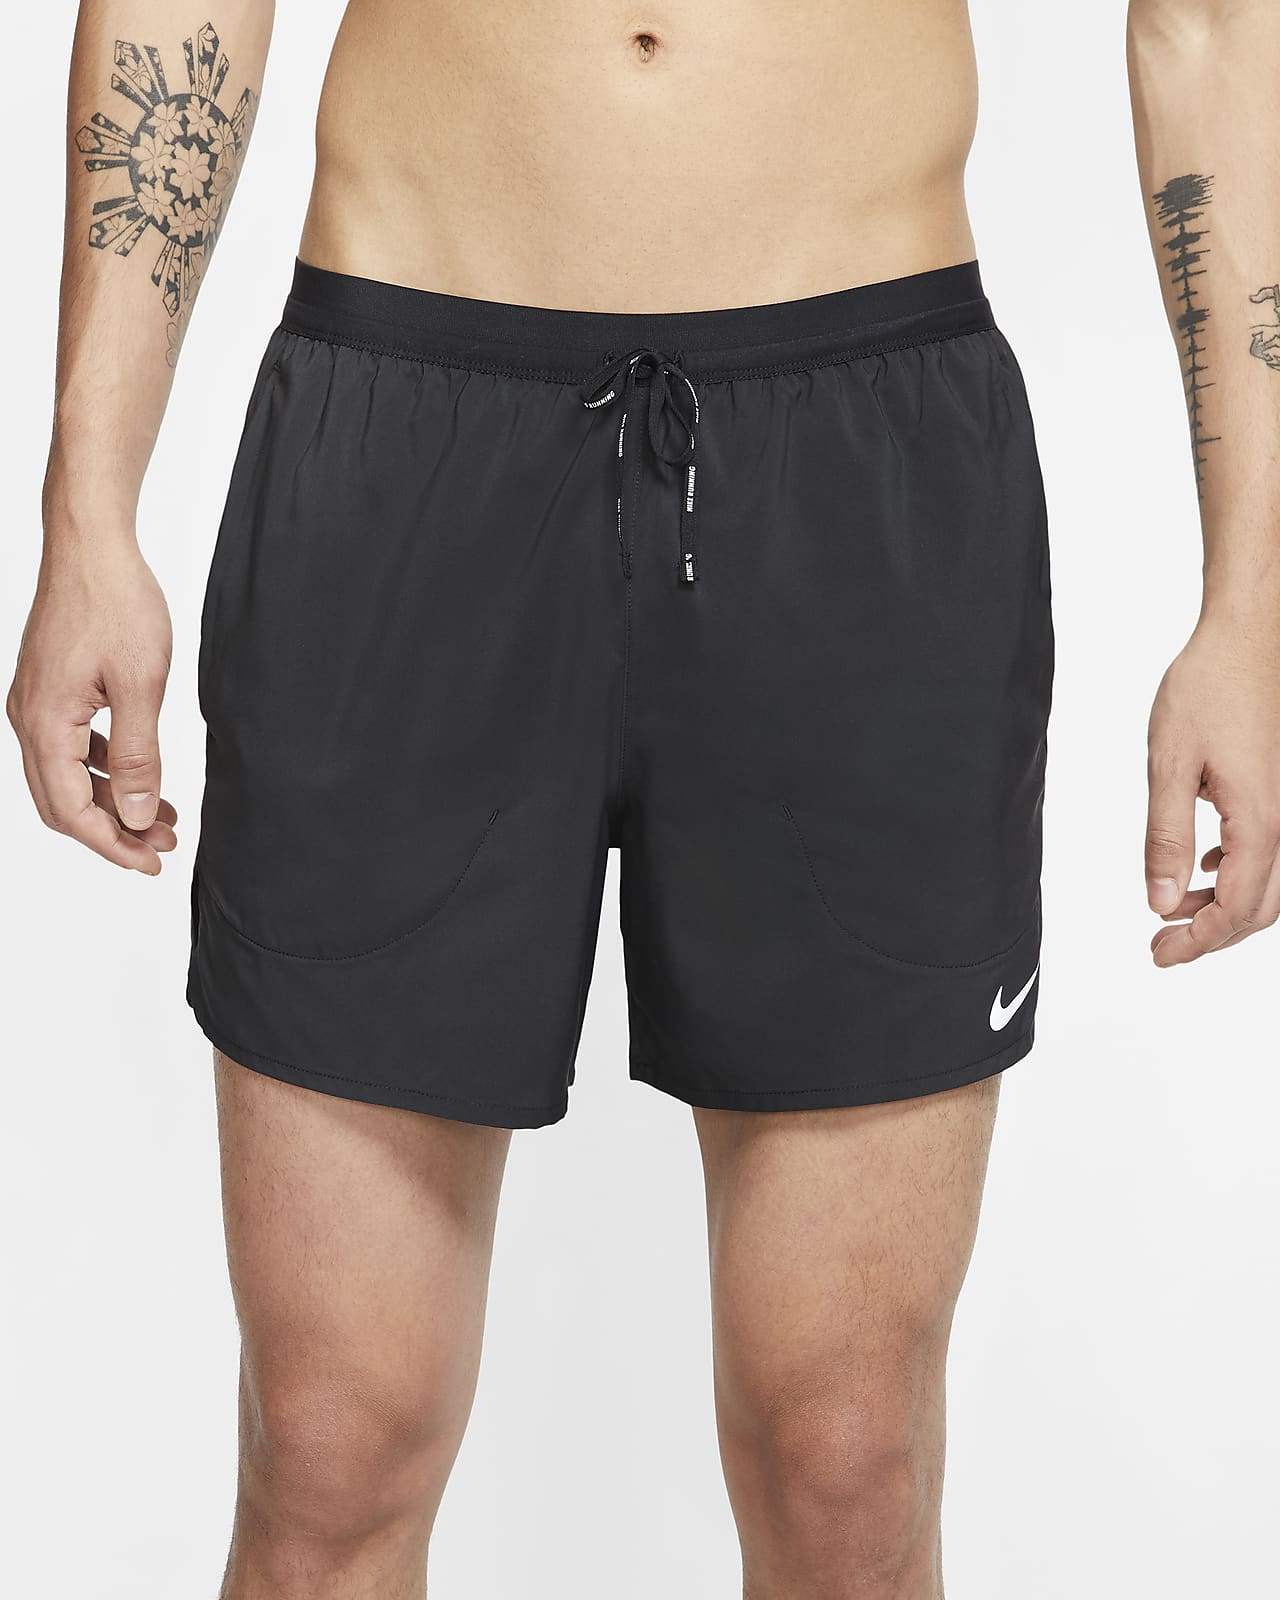 Chronic Pew pocket Nike Flex Stride Men's 5" Brief Running Shorts. Nike.com